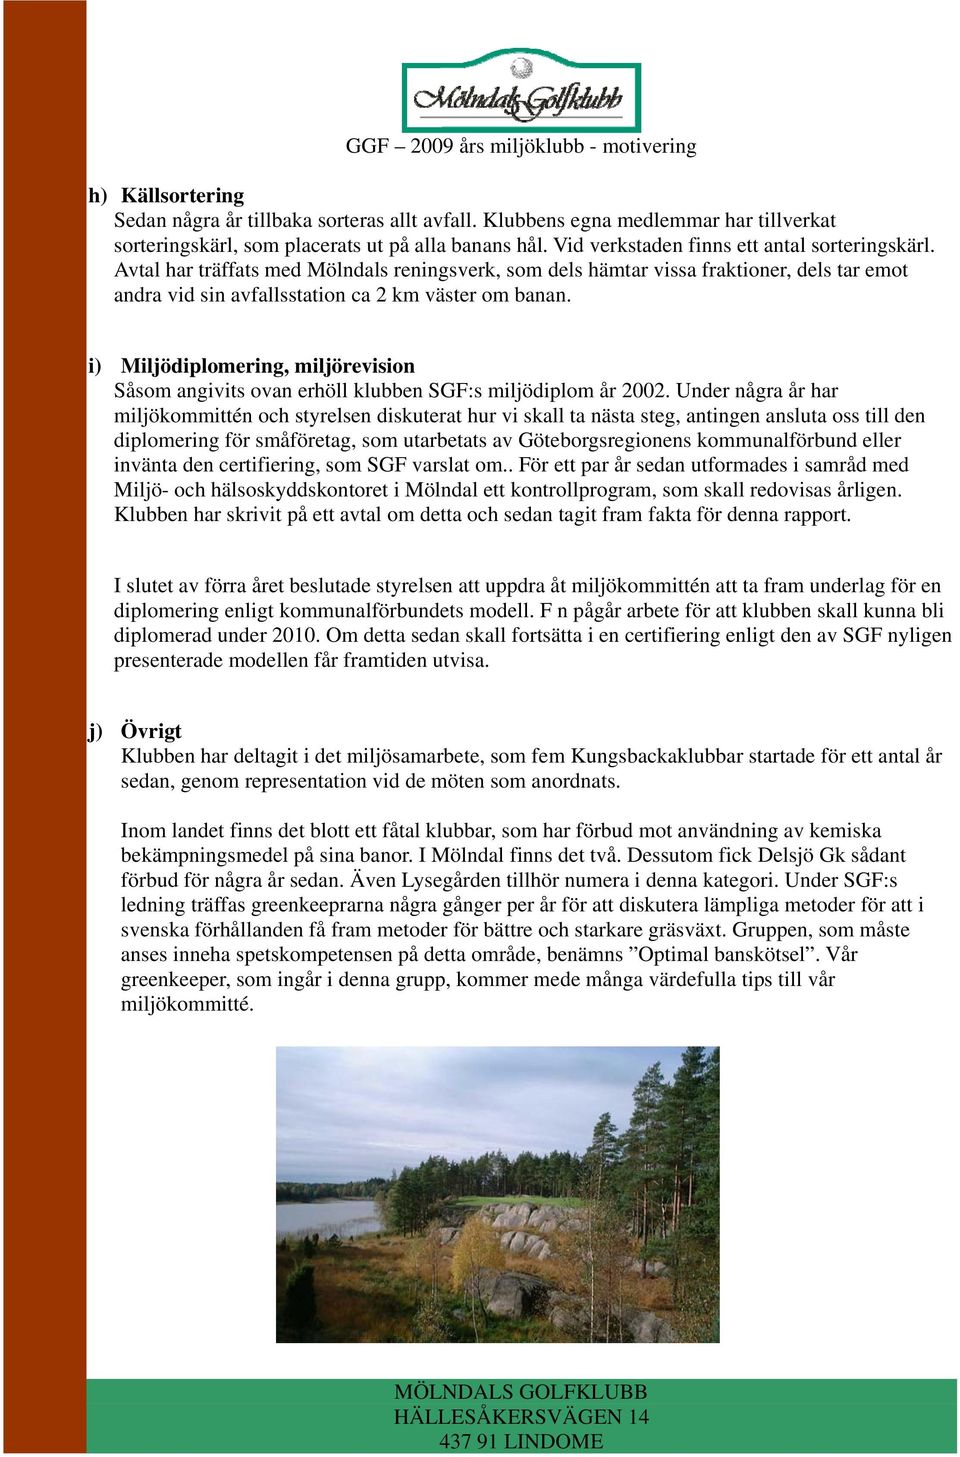 i) Miljödiplomering, miljörevision Såsom angivits ovan erhöll klubben SGF:s miljödiplom år 2002.